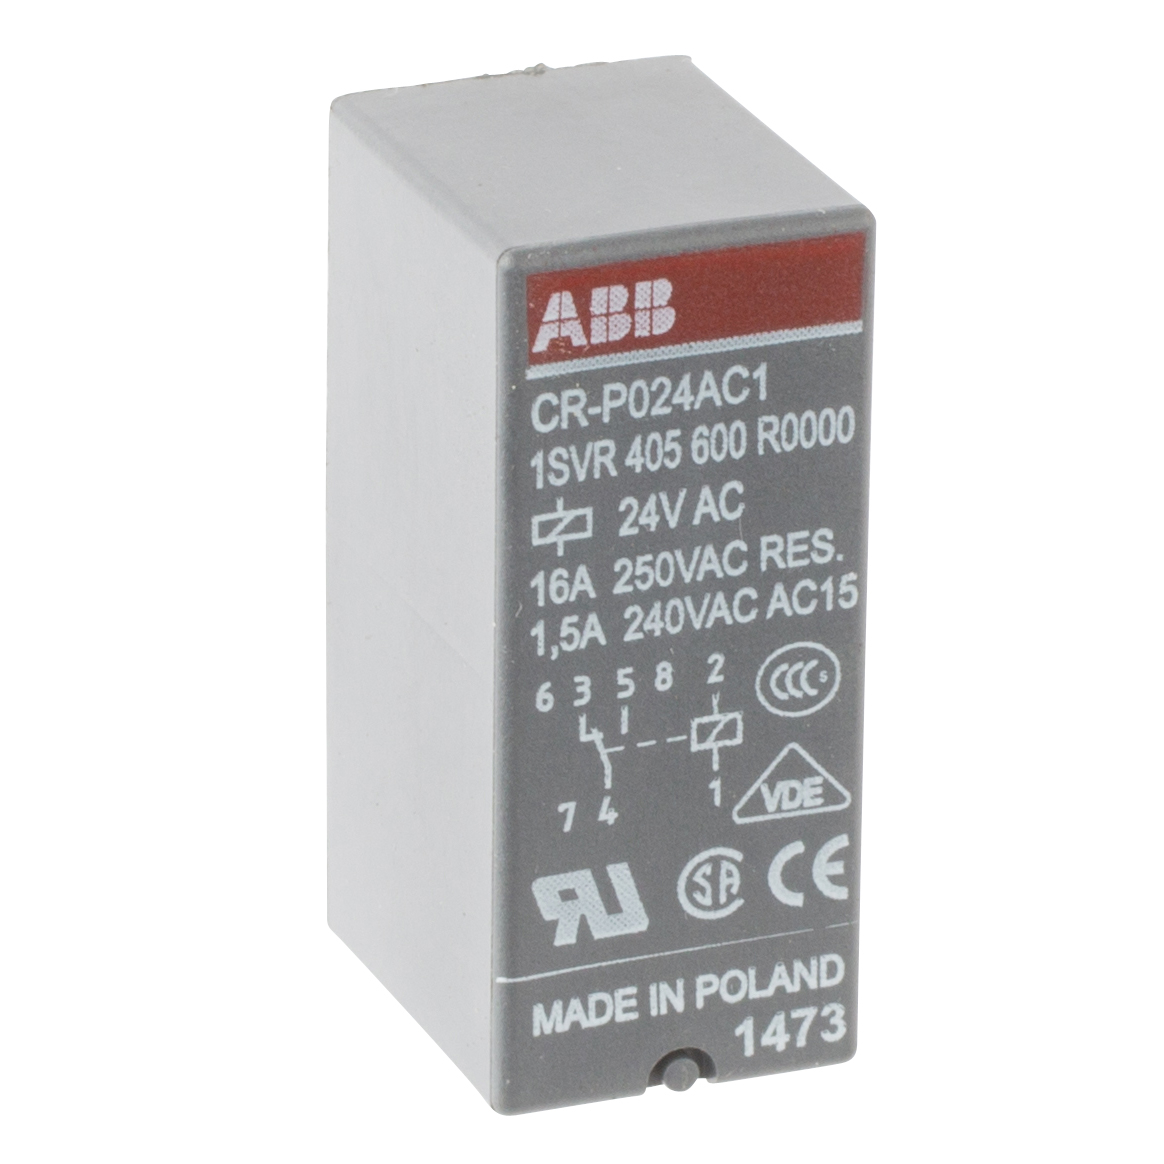 ABB 1SVR405600R0000 Pluggable Interface Relay